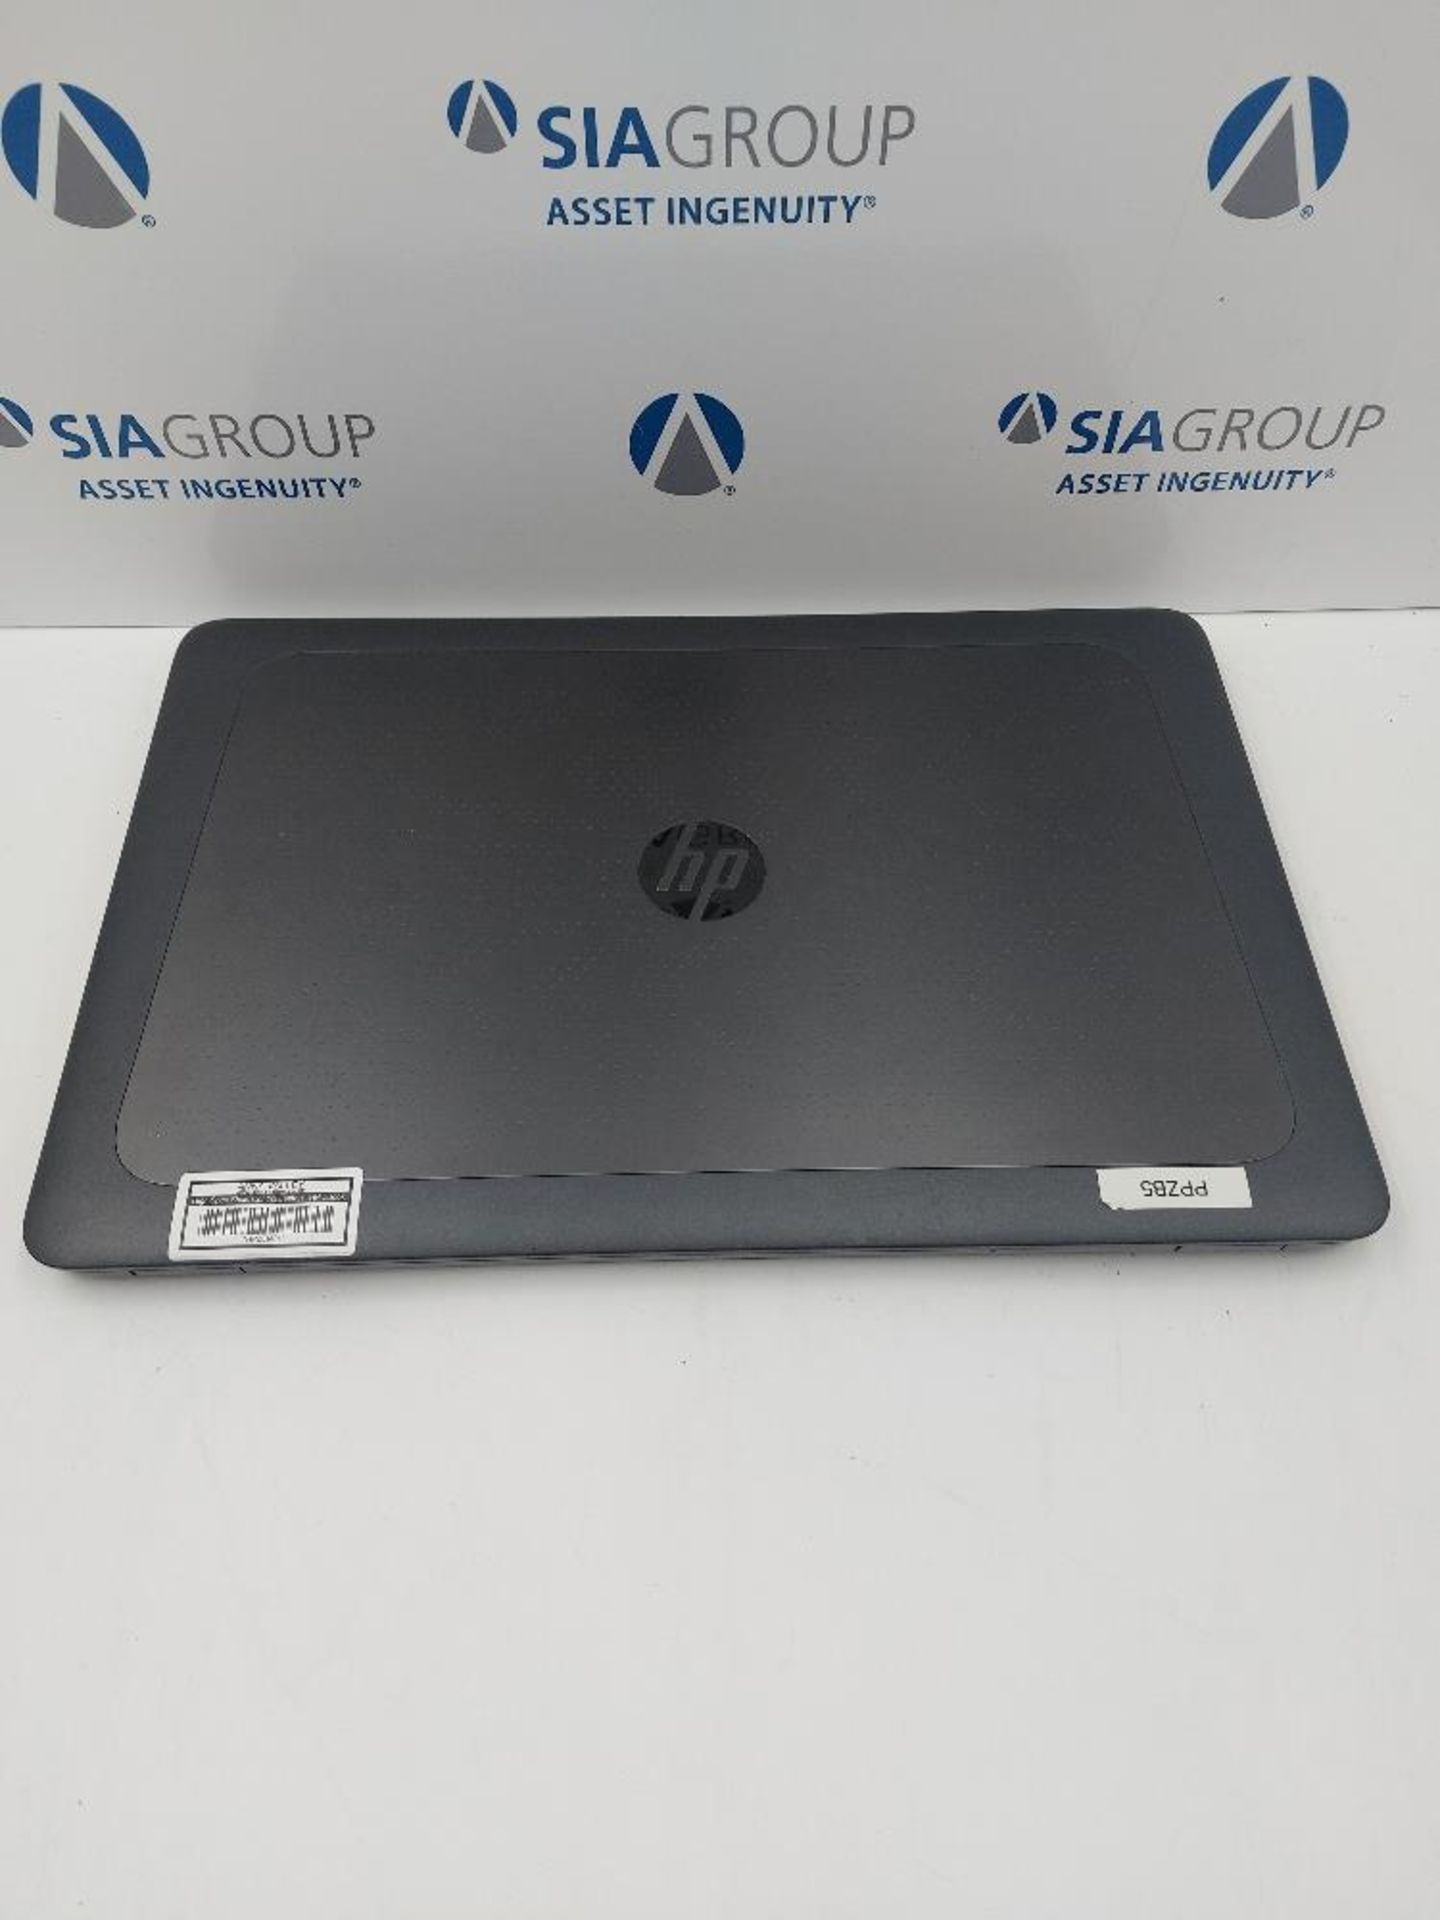 HP Zbook 15u G3 Laptop with Flight Case - Image 4 of 7